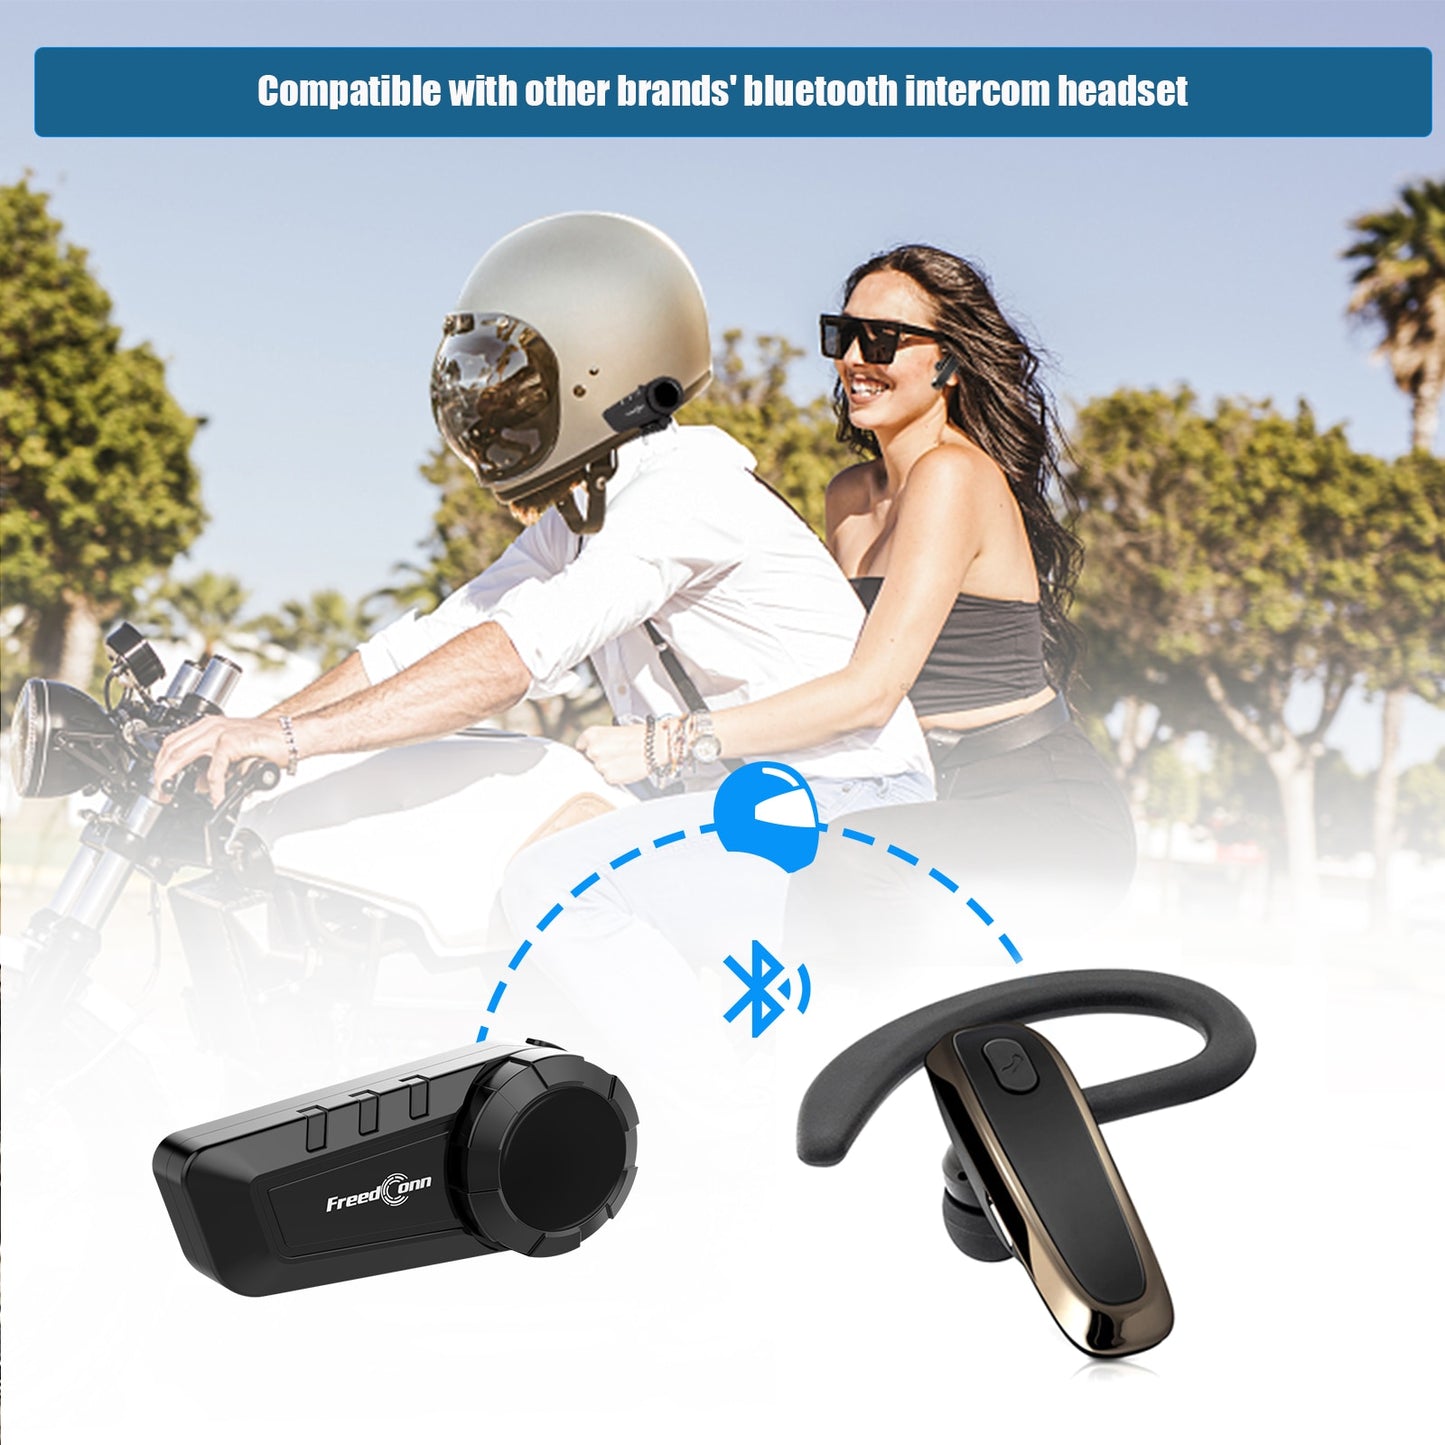 Freedconn KY Pro Motorcycle Intercom Bluetooth Helmet Headset Motorbike Communicator 6 Riders Moto Group Waterproof Interphone - youronestopstore23